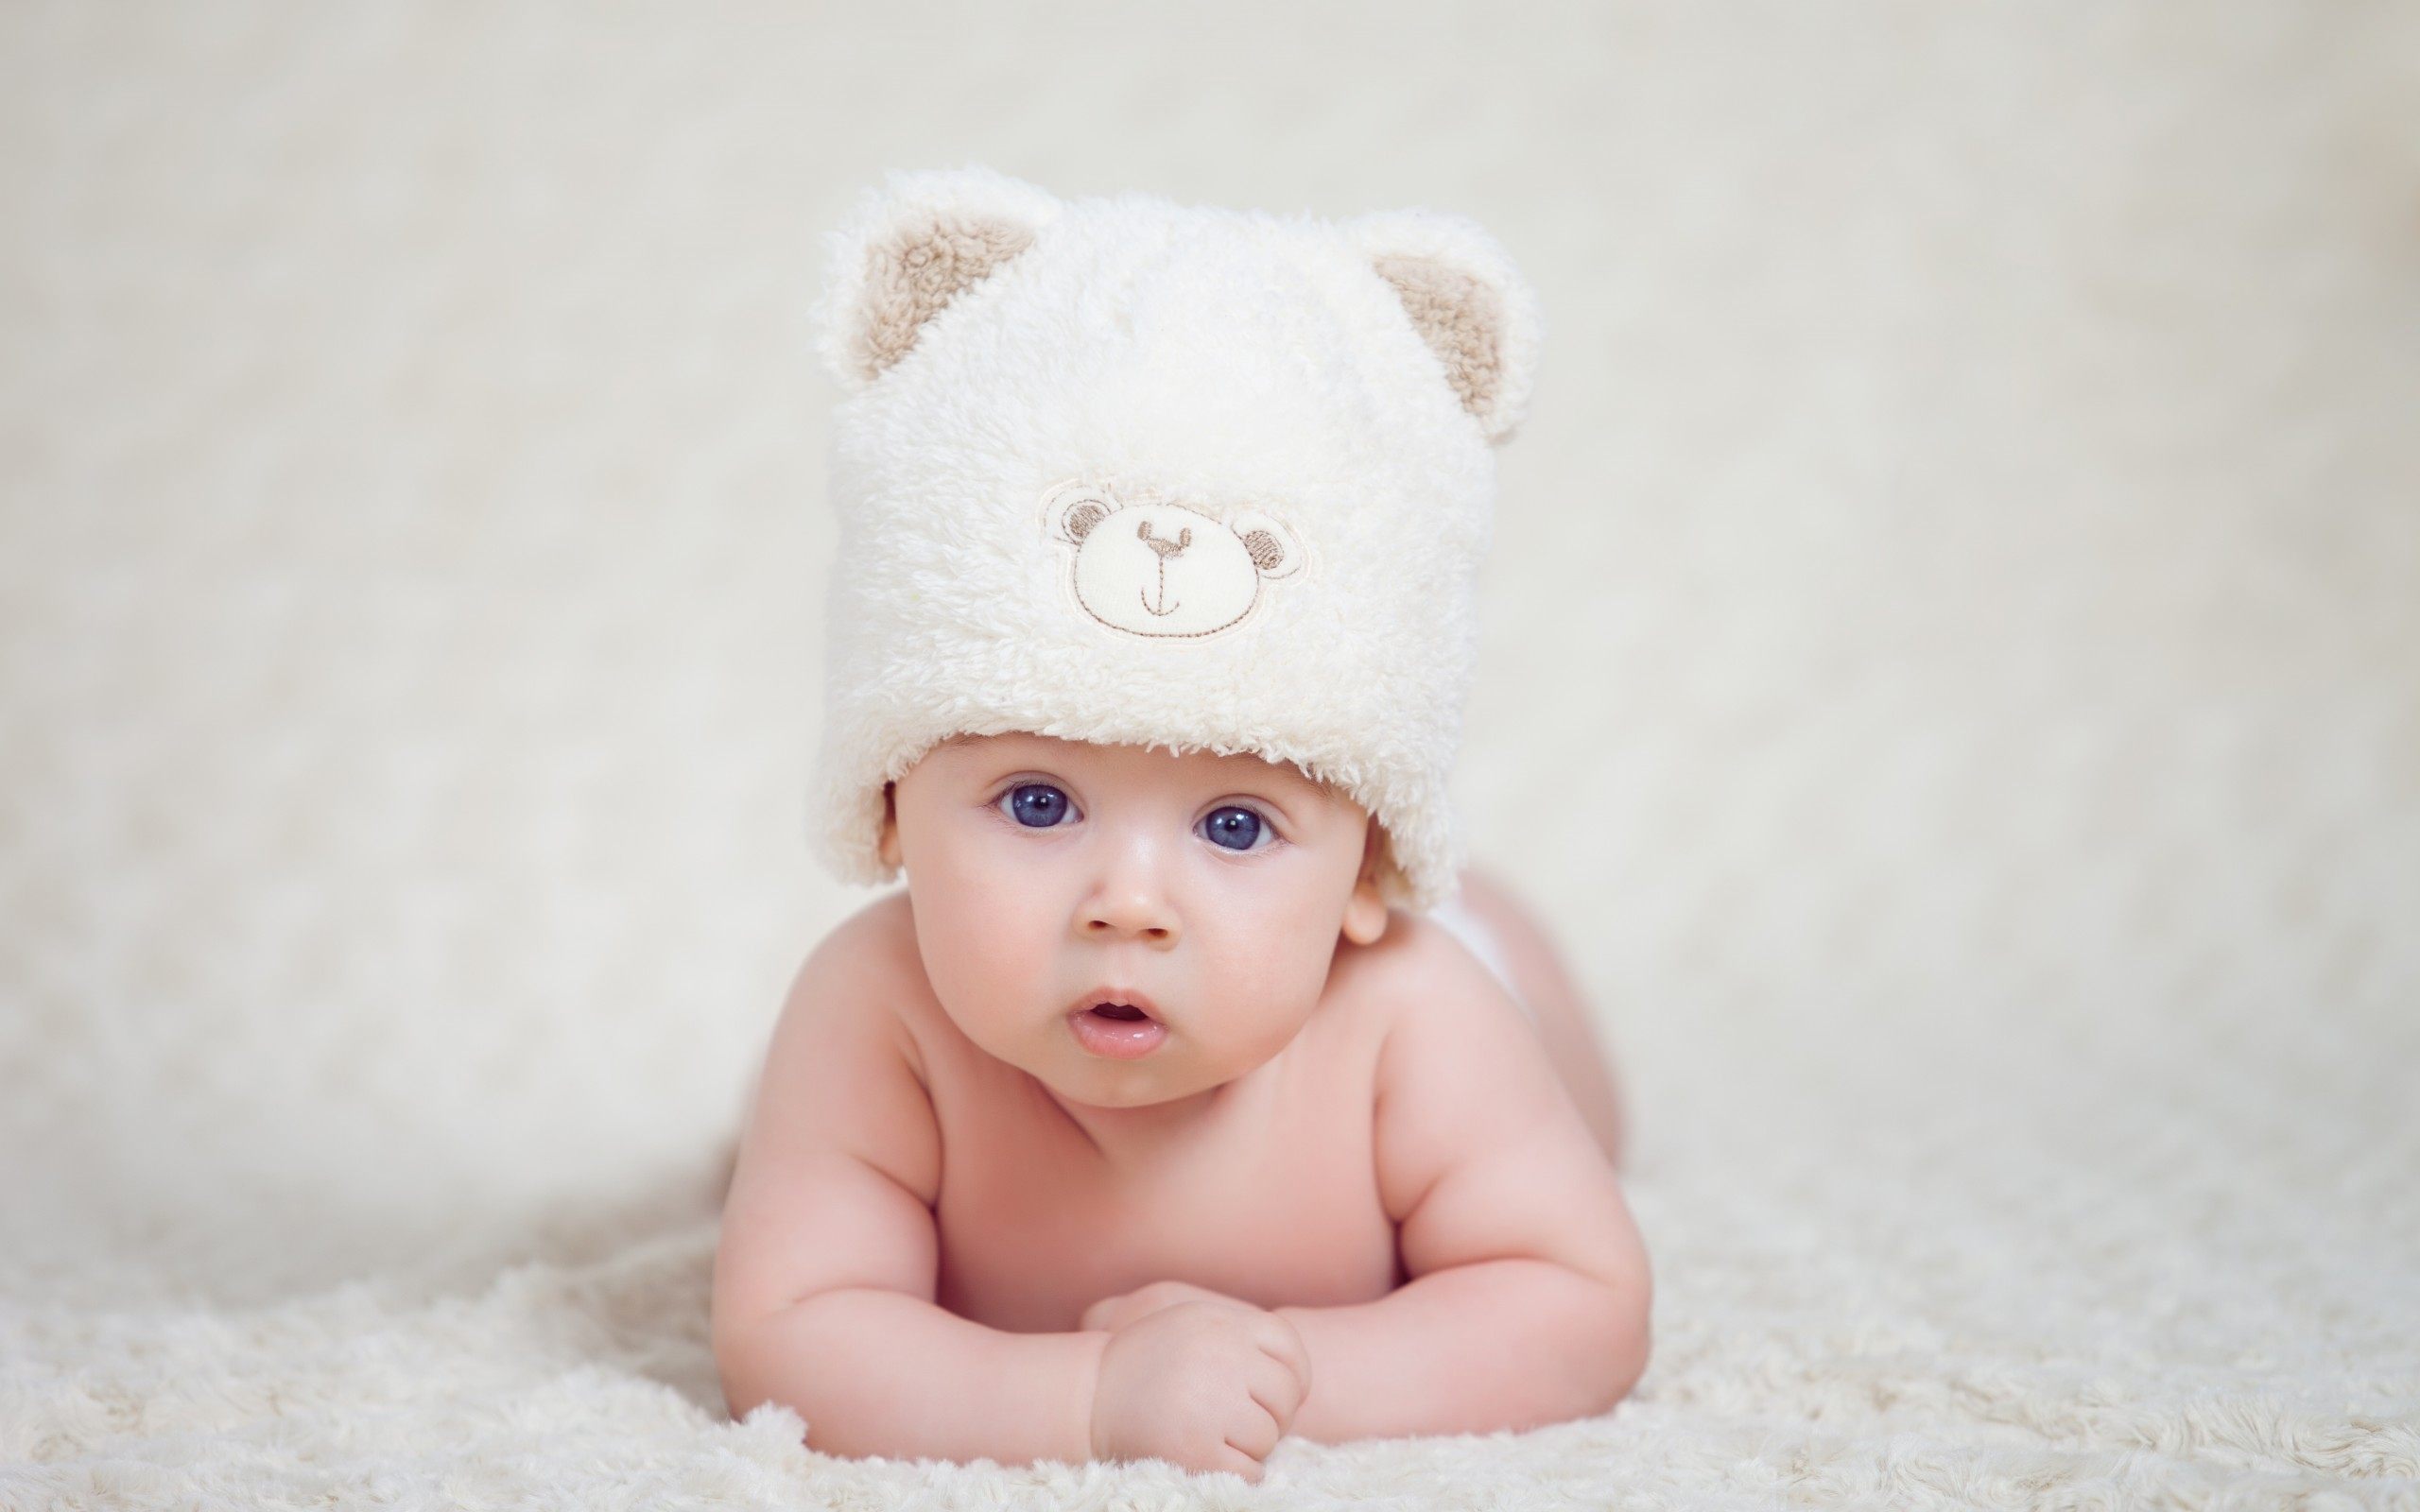 Baby Blue Eyes Cute Wallpaper HD Download Of Cute Baby